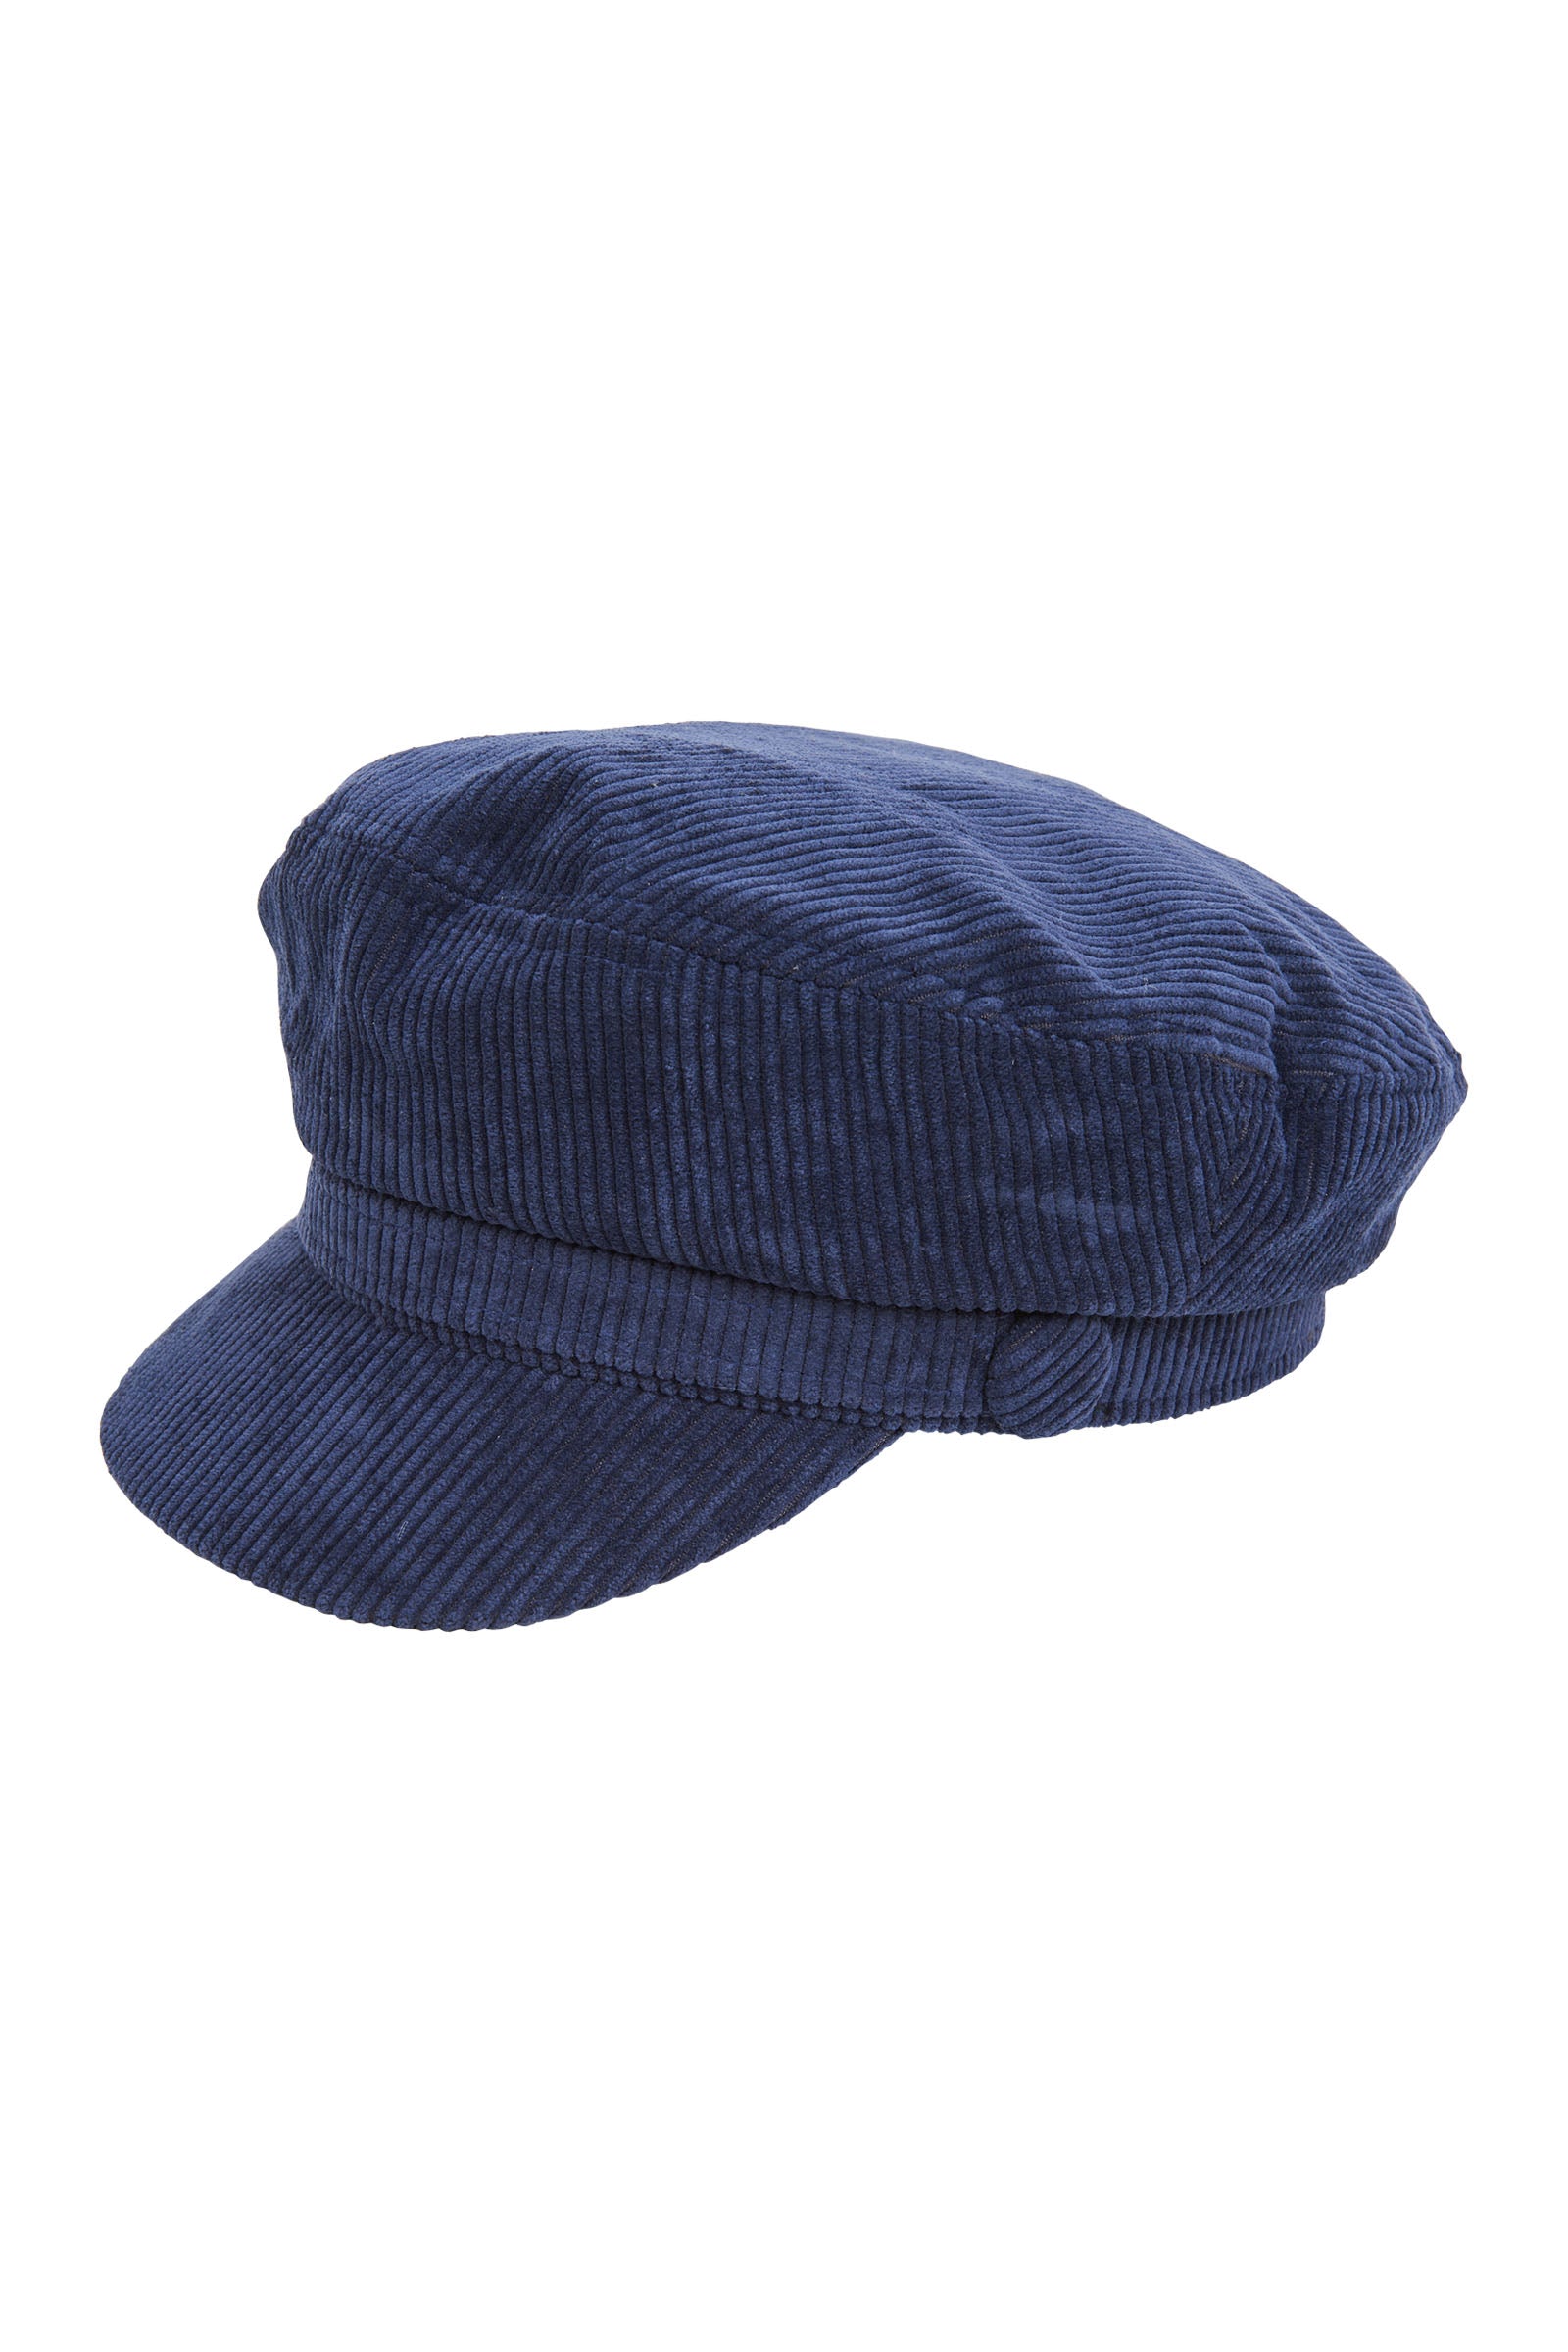 Vista Cap - Twilight - Isle of Mine Hat